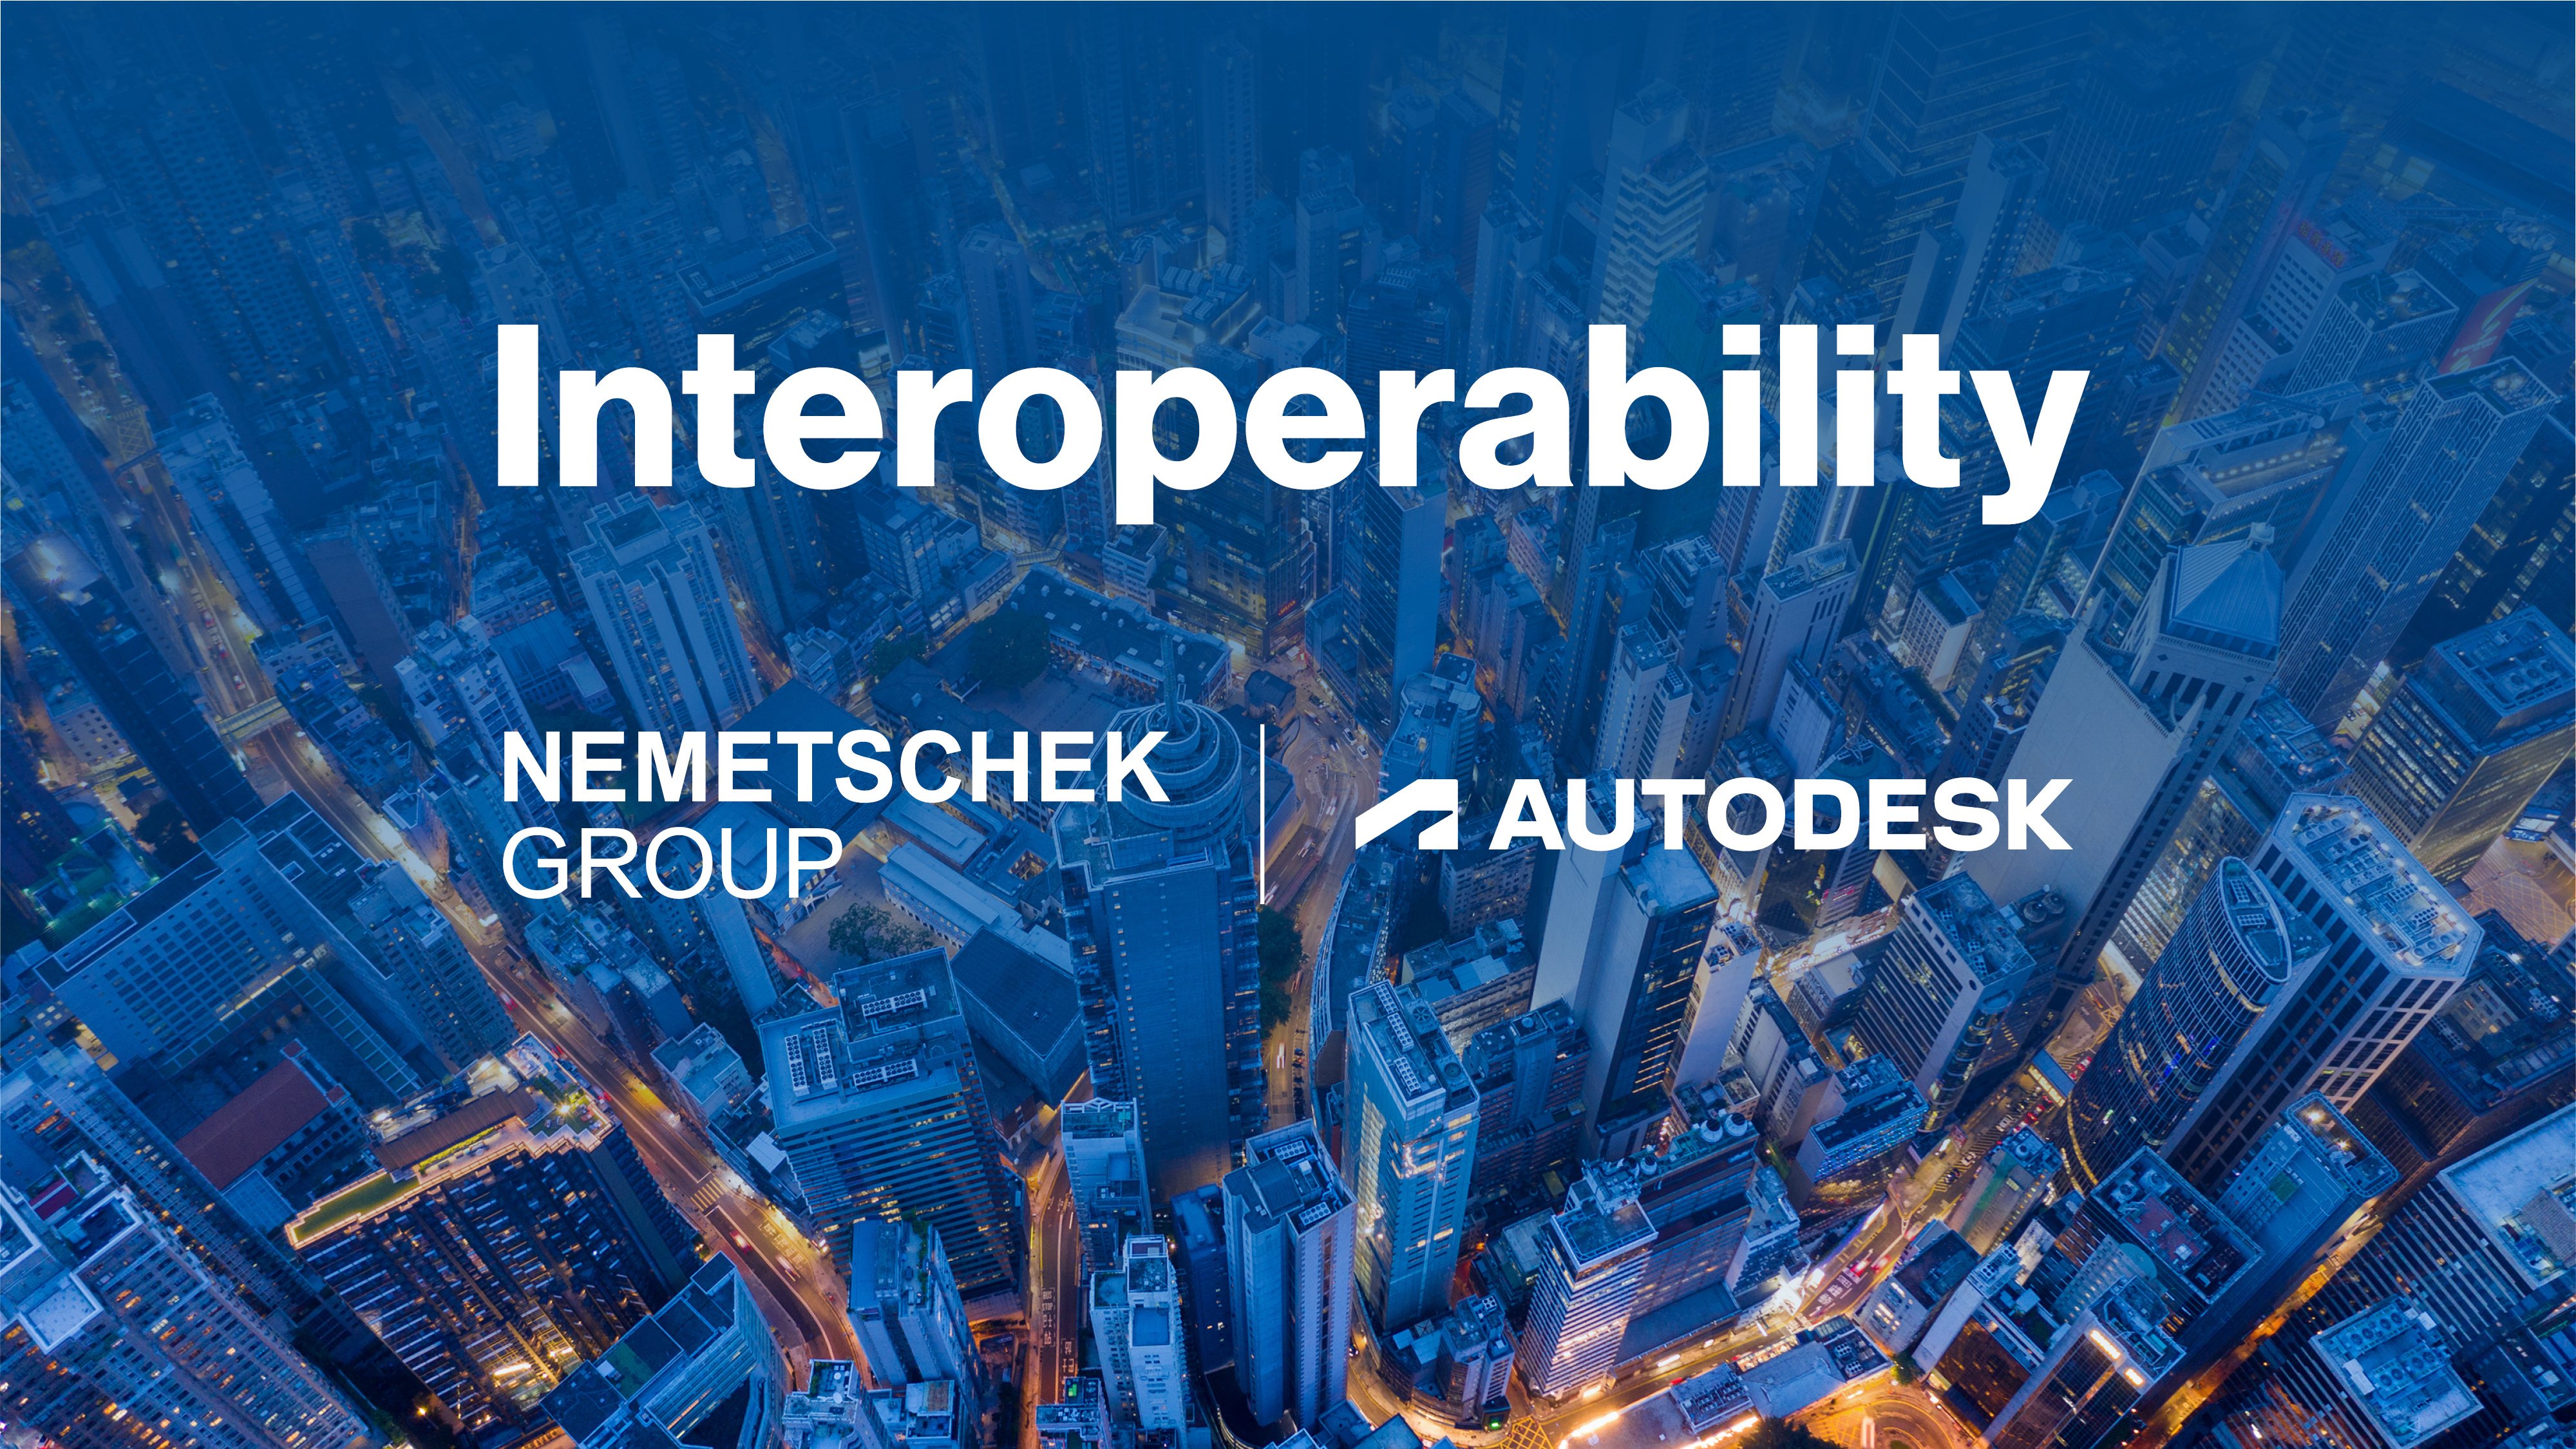 Building Better Together: Nemetschek and Autodesk’s Interoperability Agreement